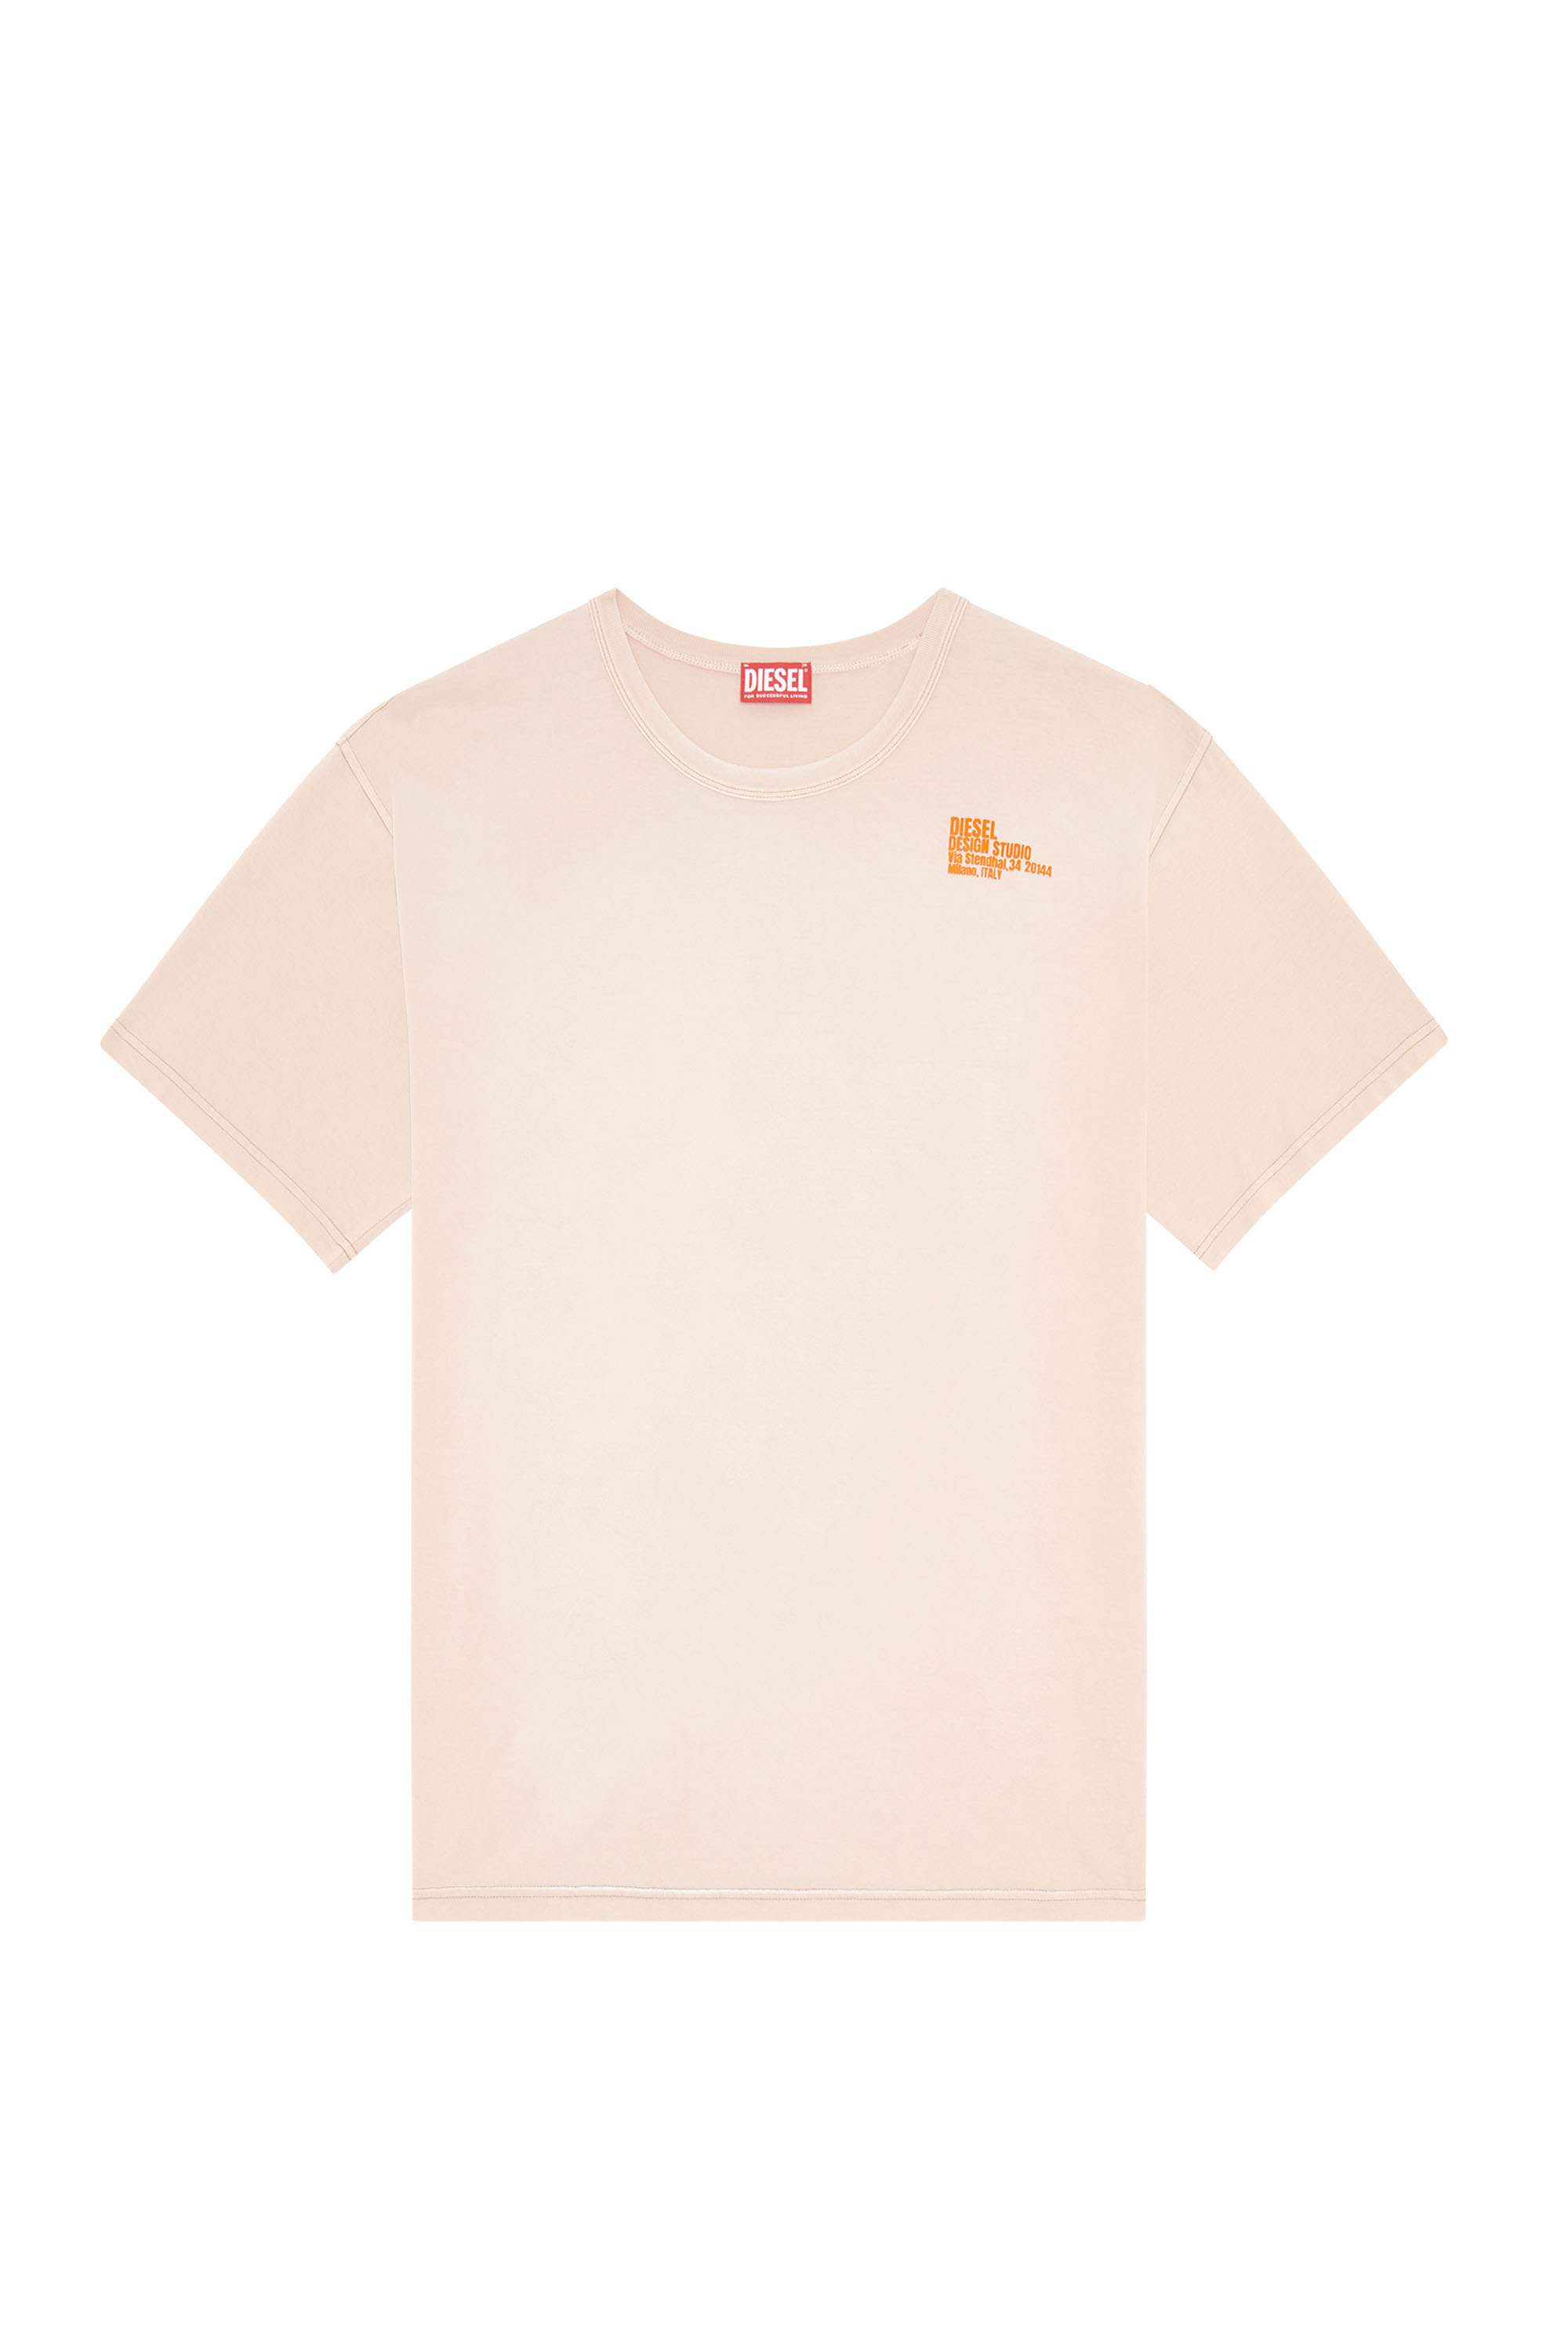 Diesel - T-BOXT-N7, Homme T-shirt avec mini imprimé Design Studio in Rose - Image 5